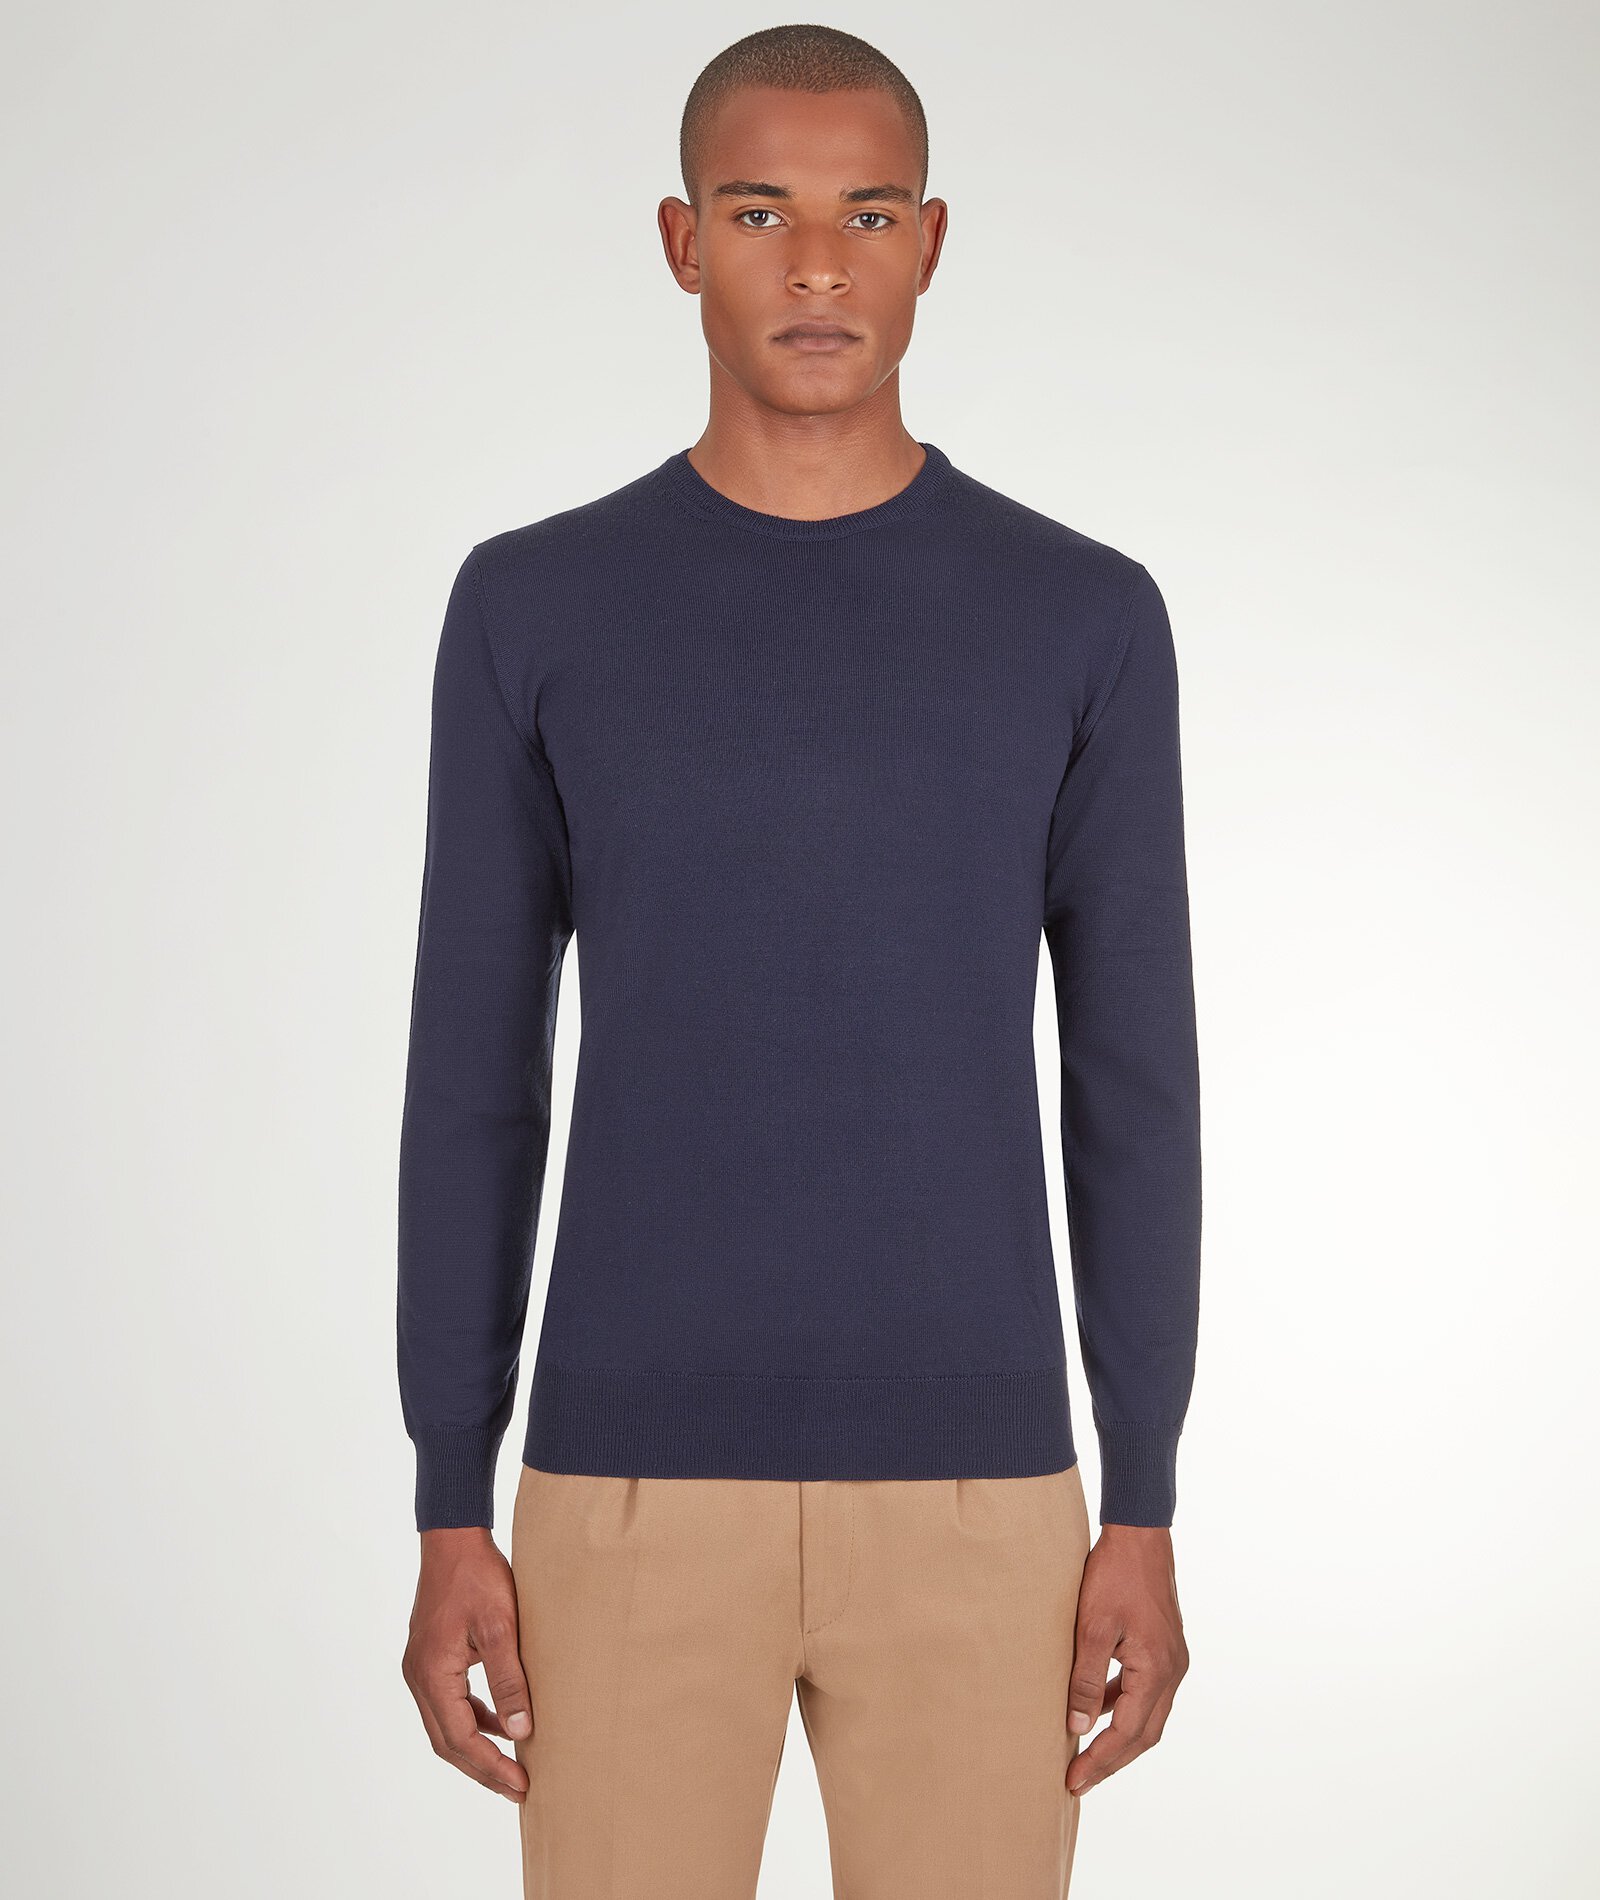 Blue Woollen Men's Sweater, Everyday Elegance Made in Italy | Lanieri